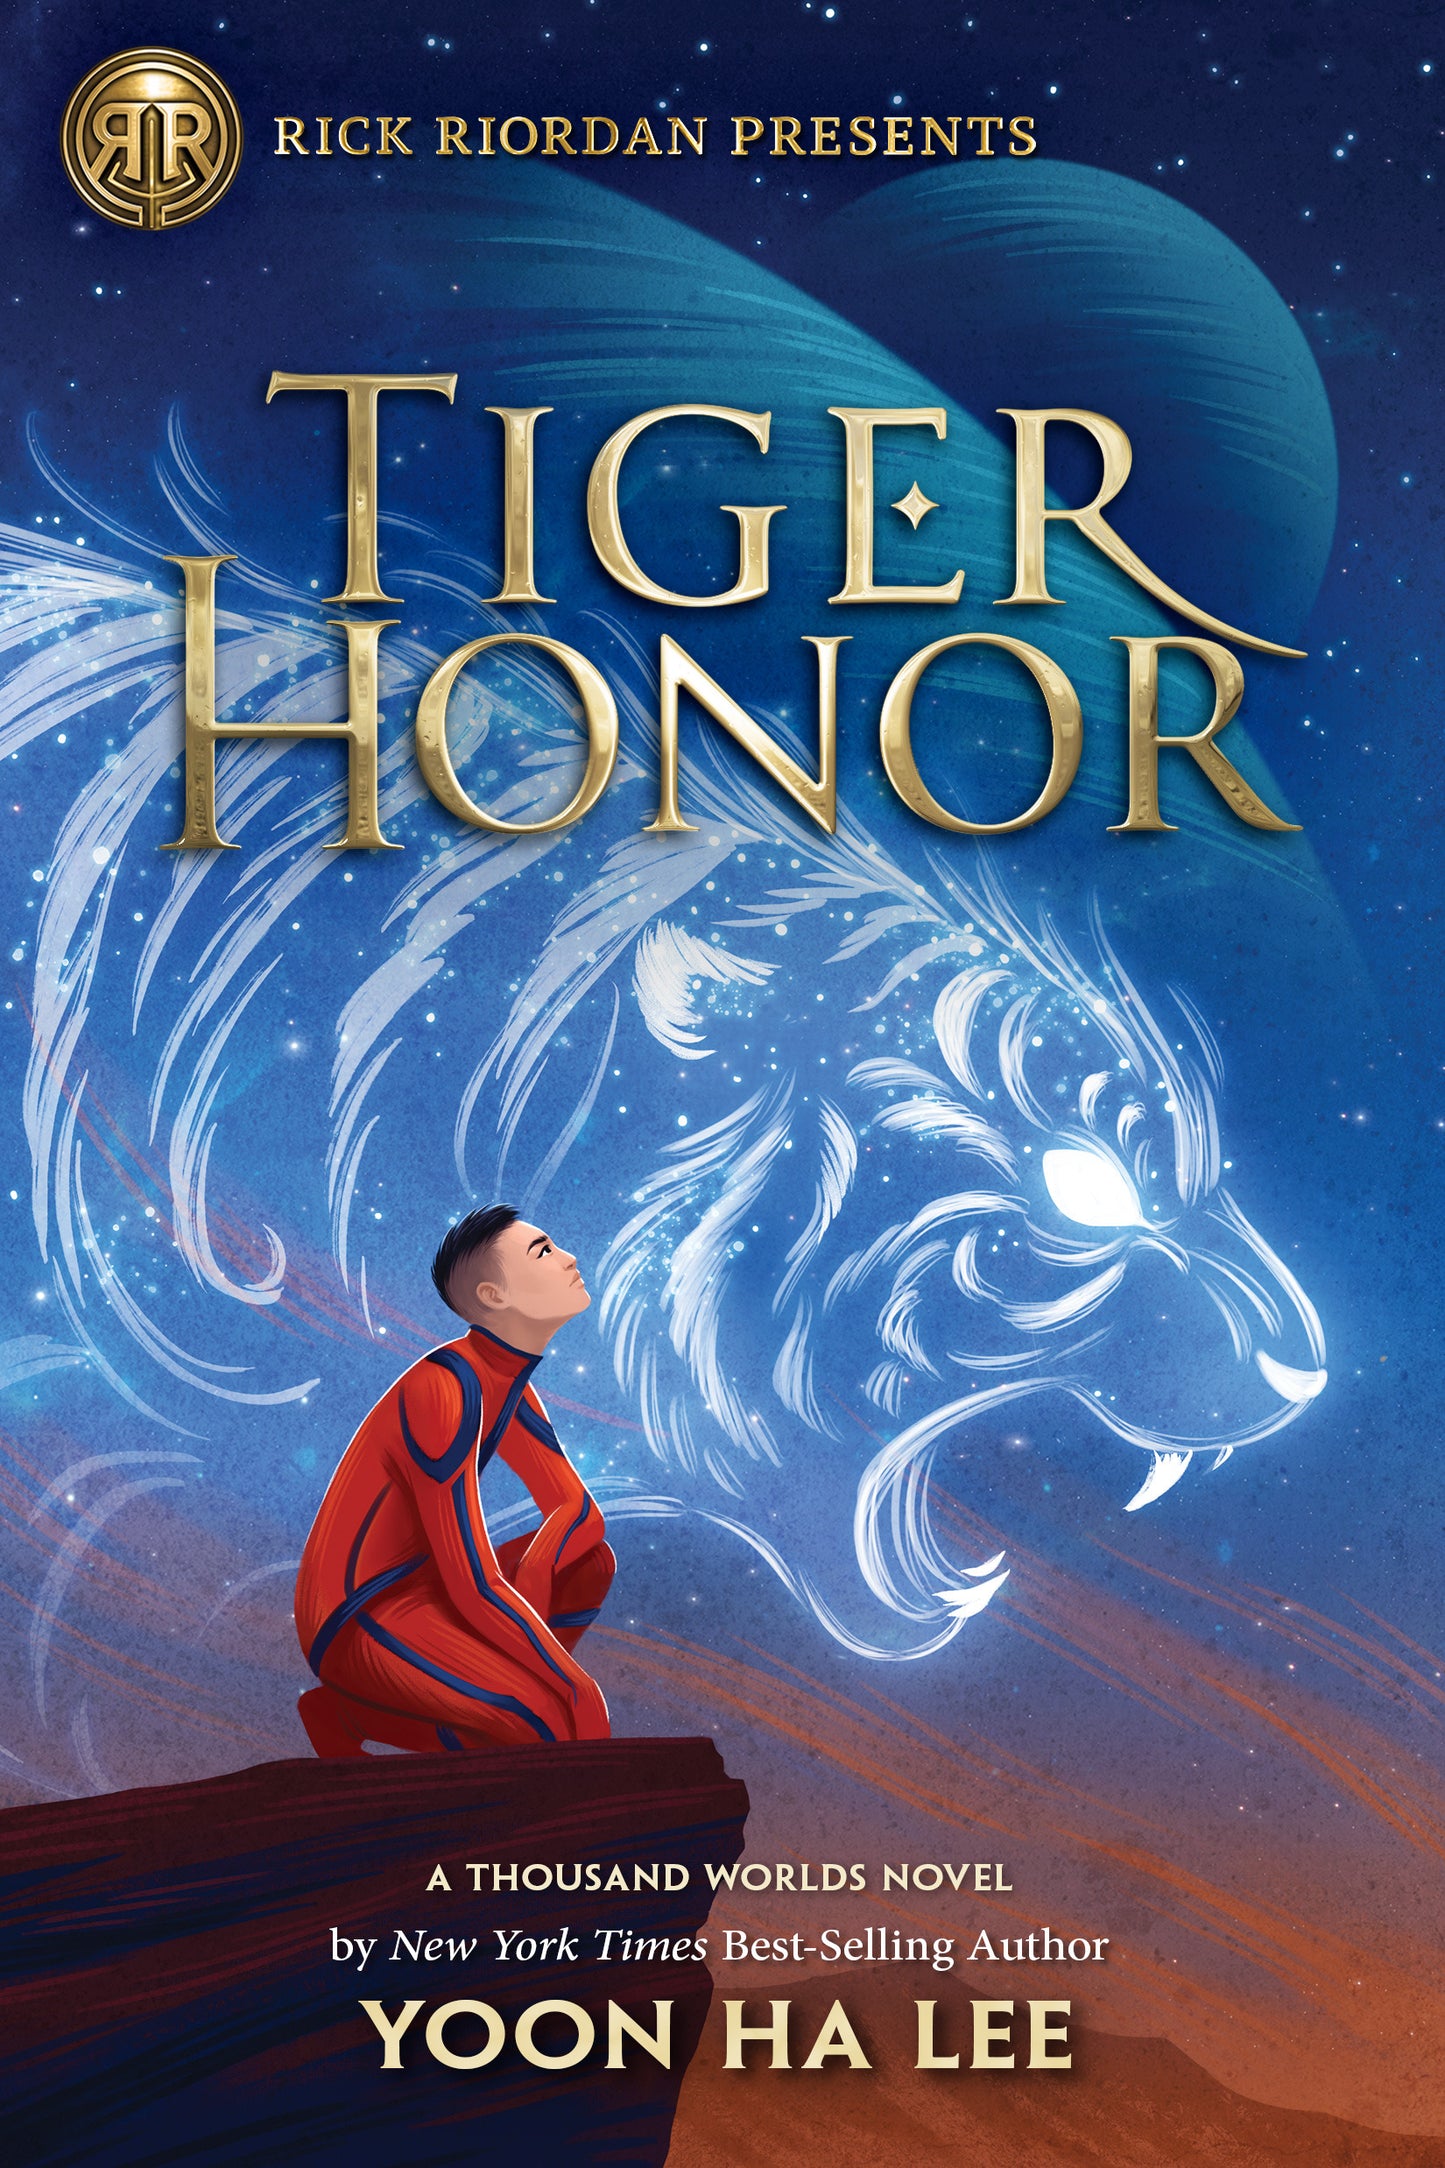 Rick Riordan Presents: Tiger Honor-A Thousand Worlds Novel Book 2